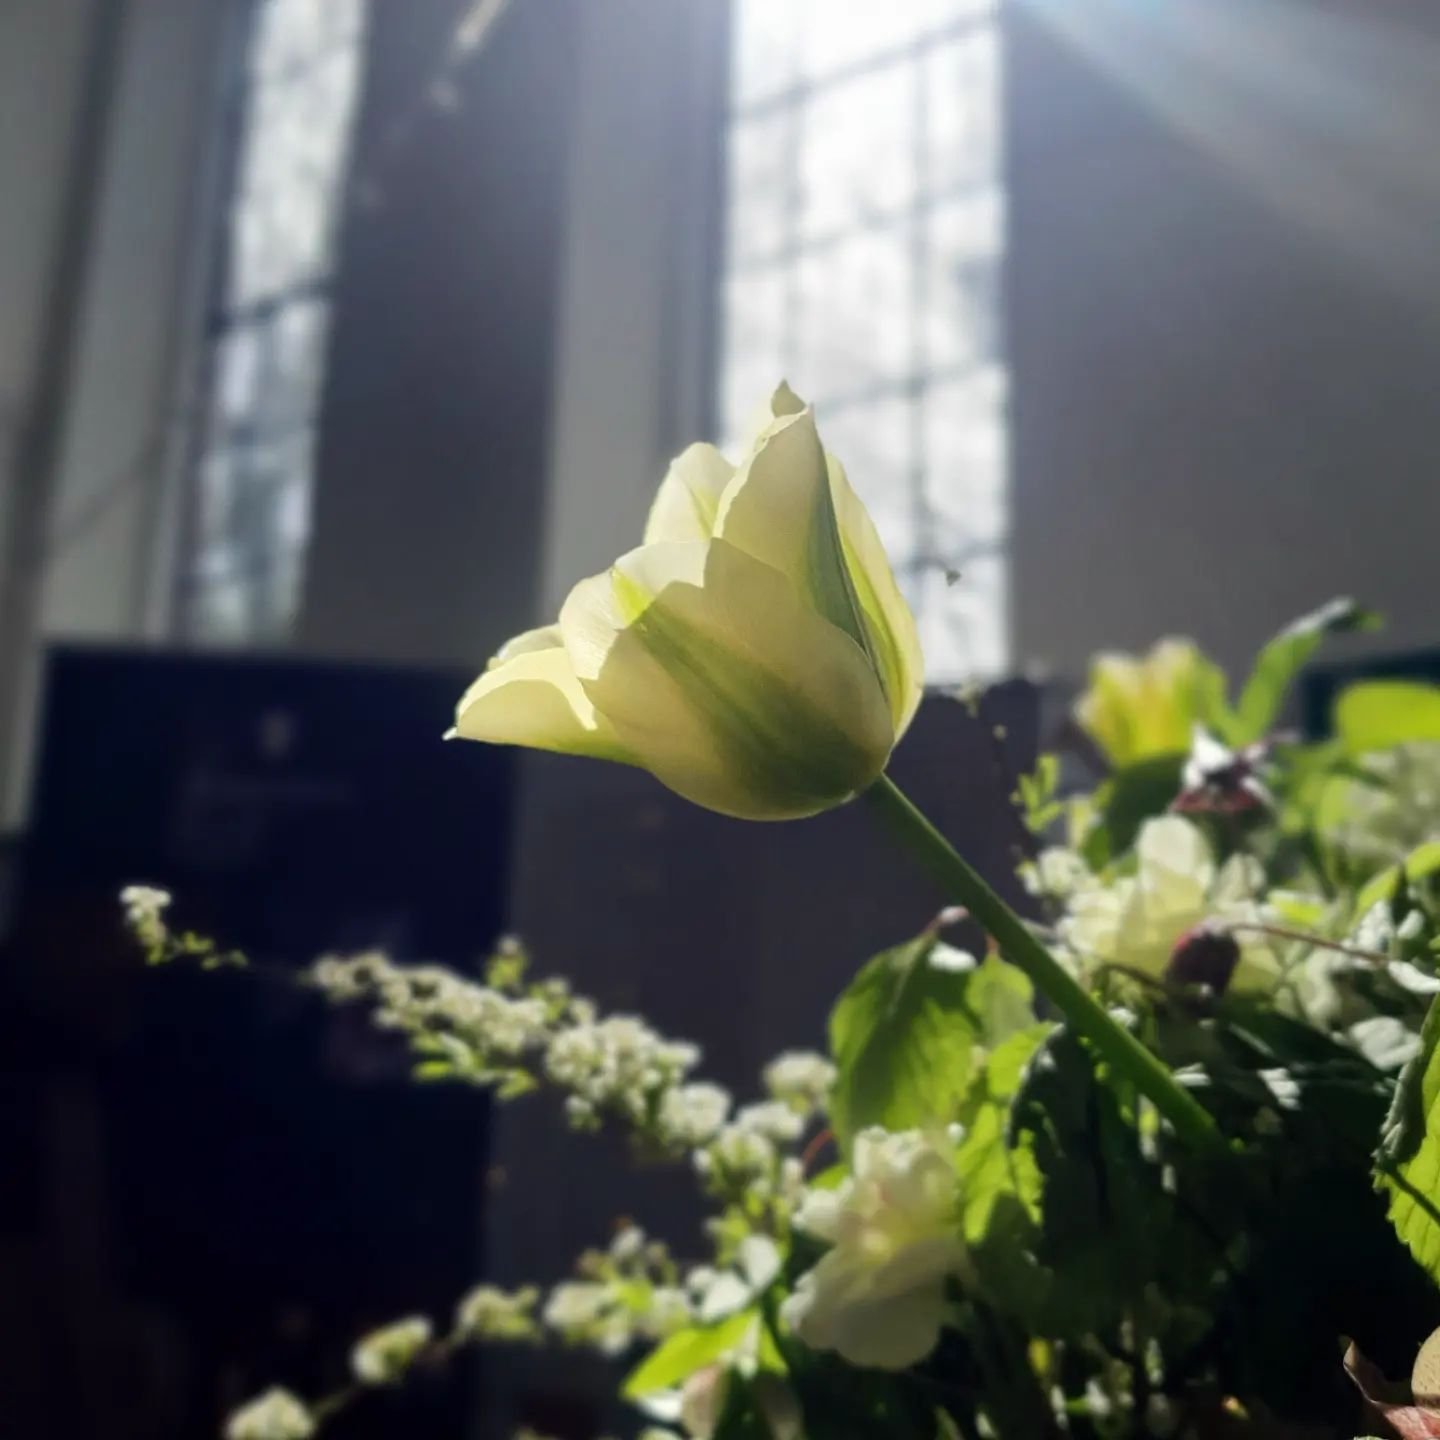 Caught a rare glimpse of sunshine 🌞 

Tulips from @thefloraladventure 

#tulips #sunshine #sunlight #Sunrays #Green #greenandwhite #wedding #weddingflorist #weddings #weddingflowers #flowers #florals #weddinginspo #springwedding #springcolours #butt